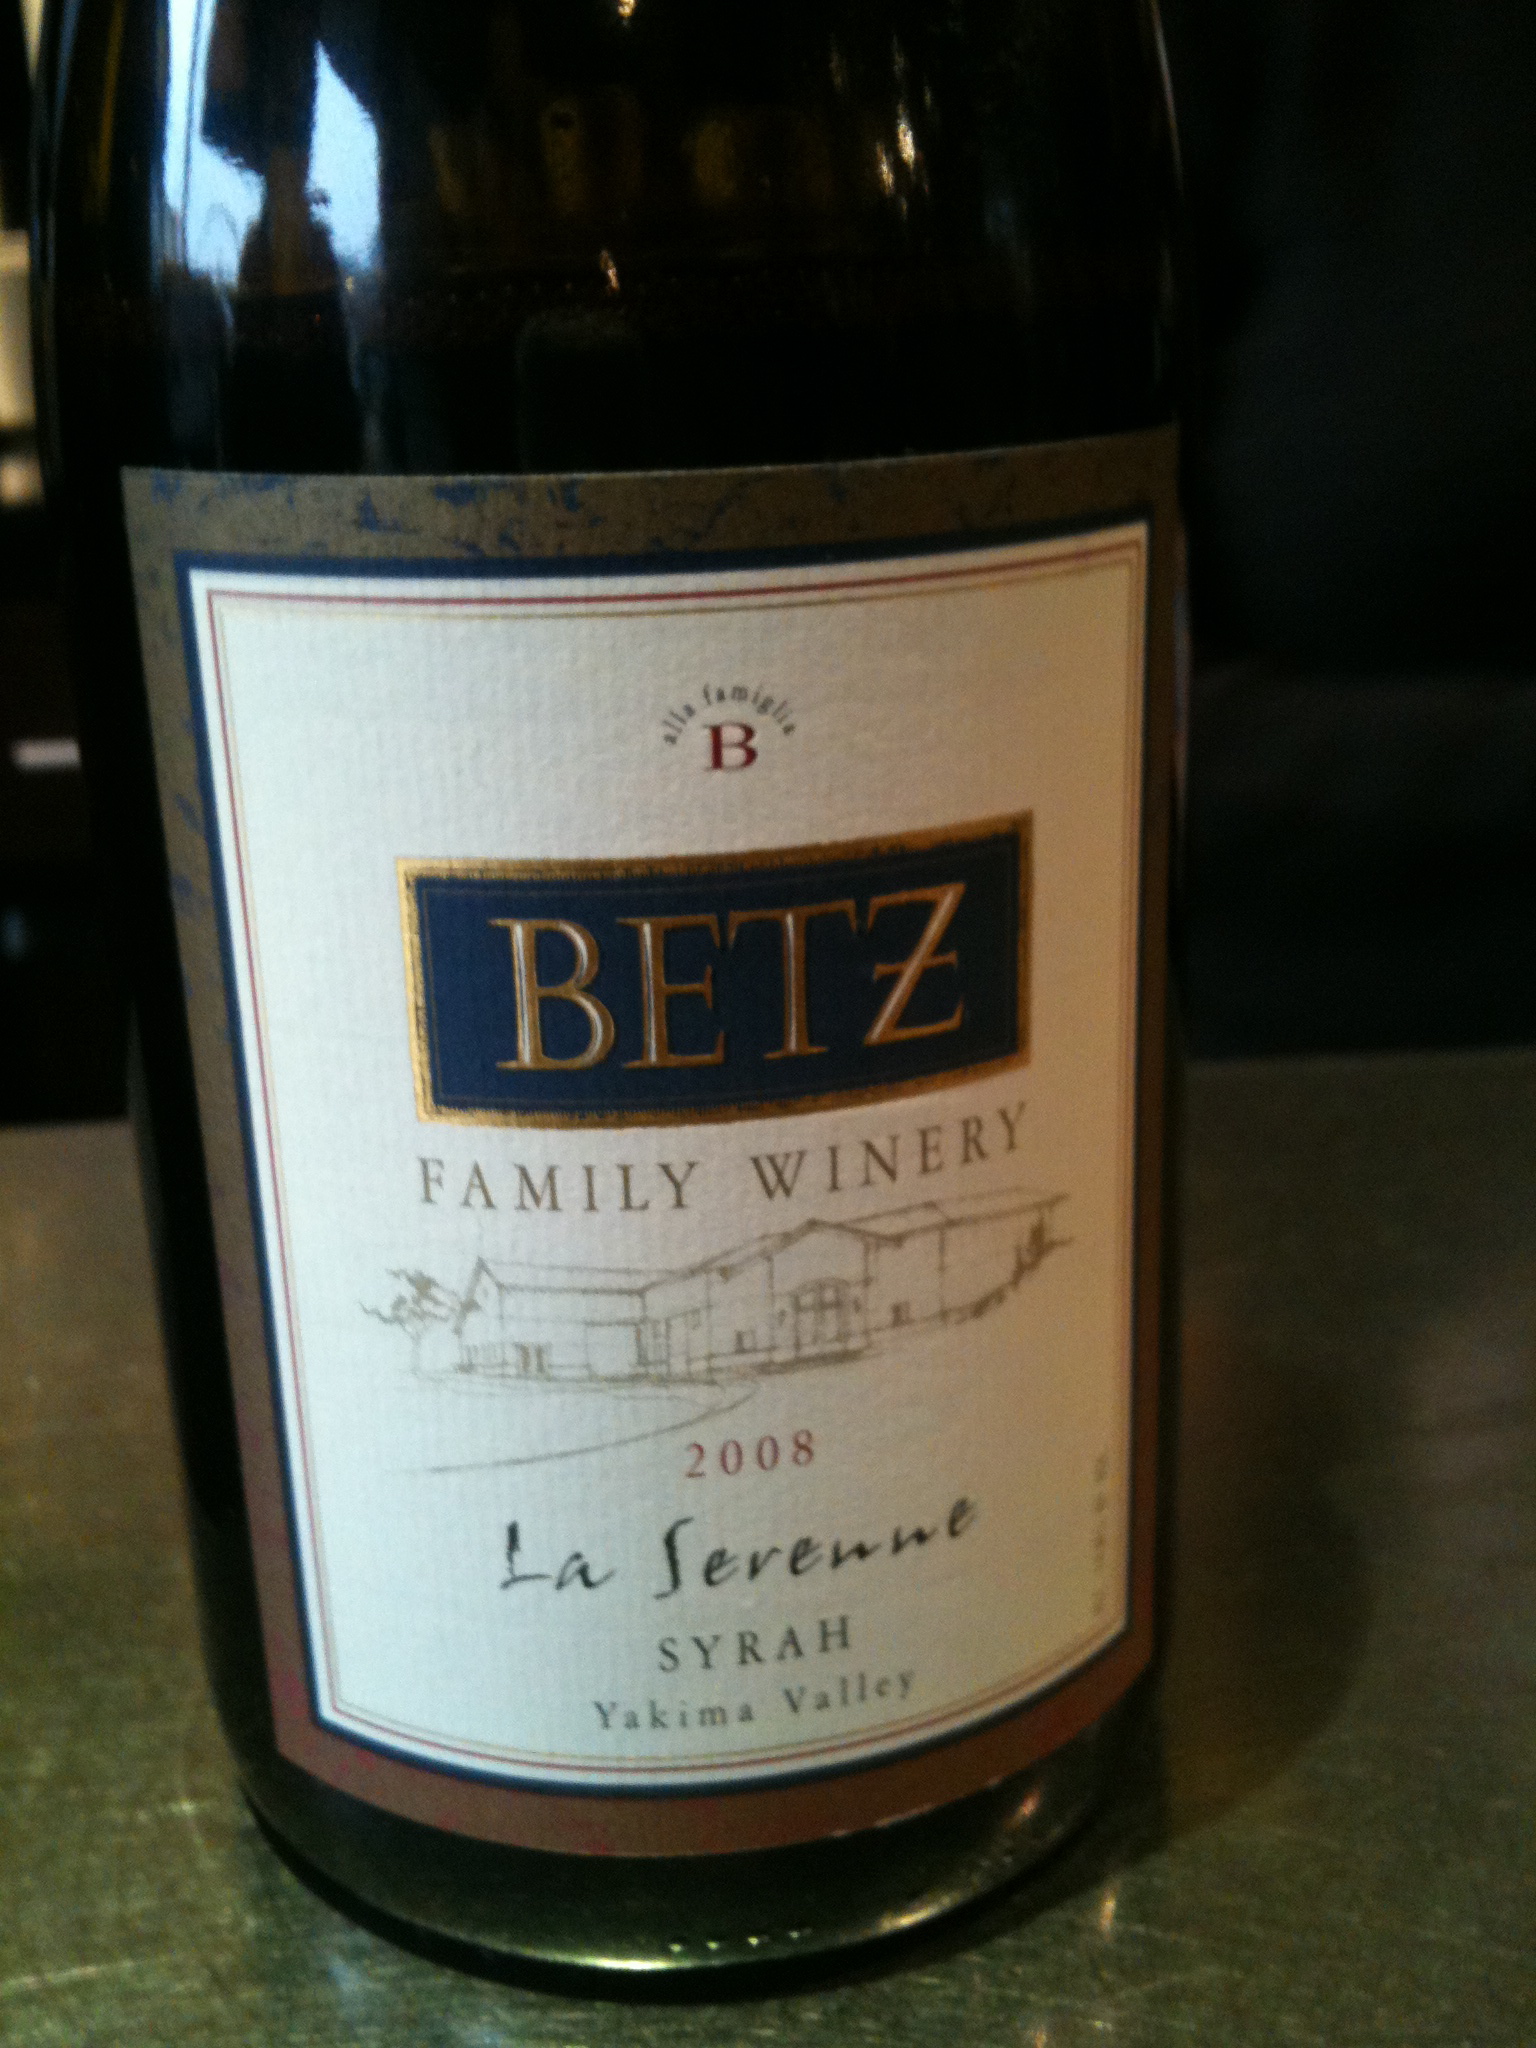 2011 Betz Family Winery La Serenne Syrah image